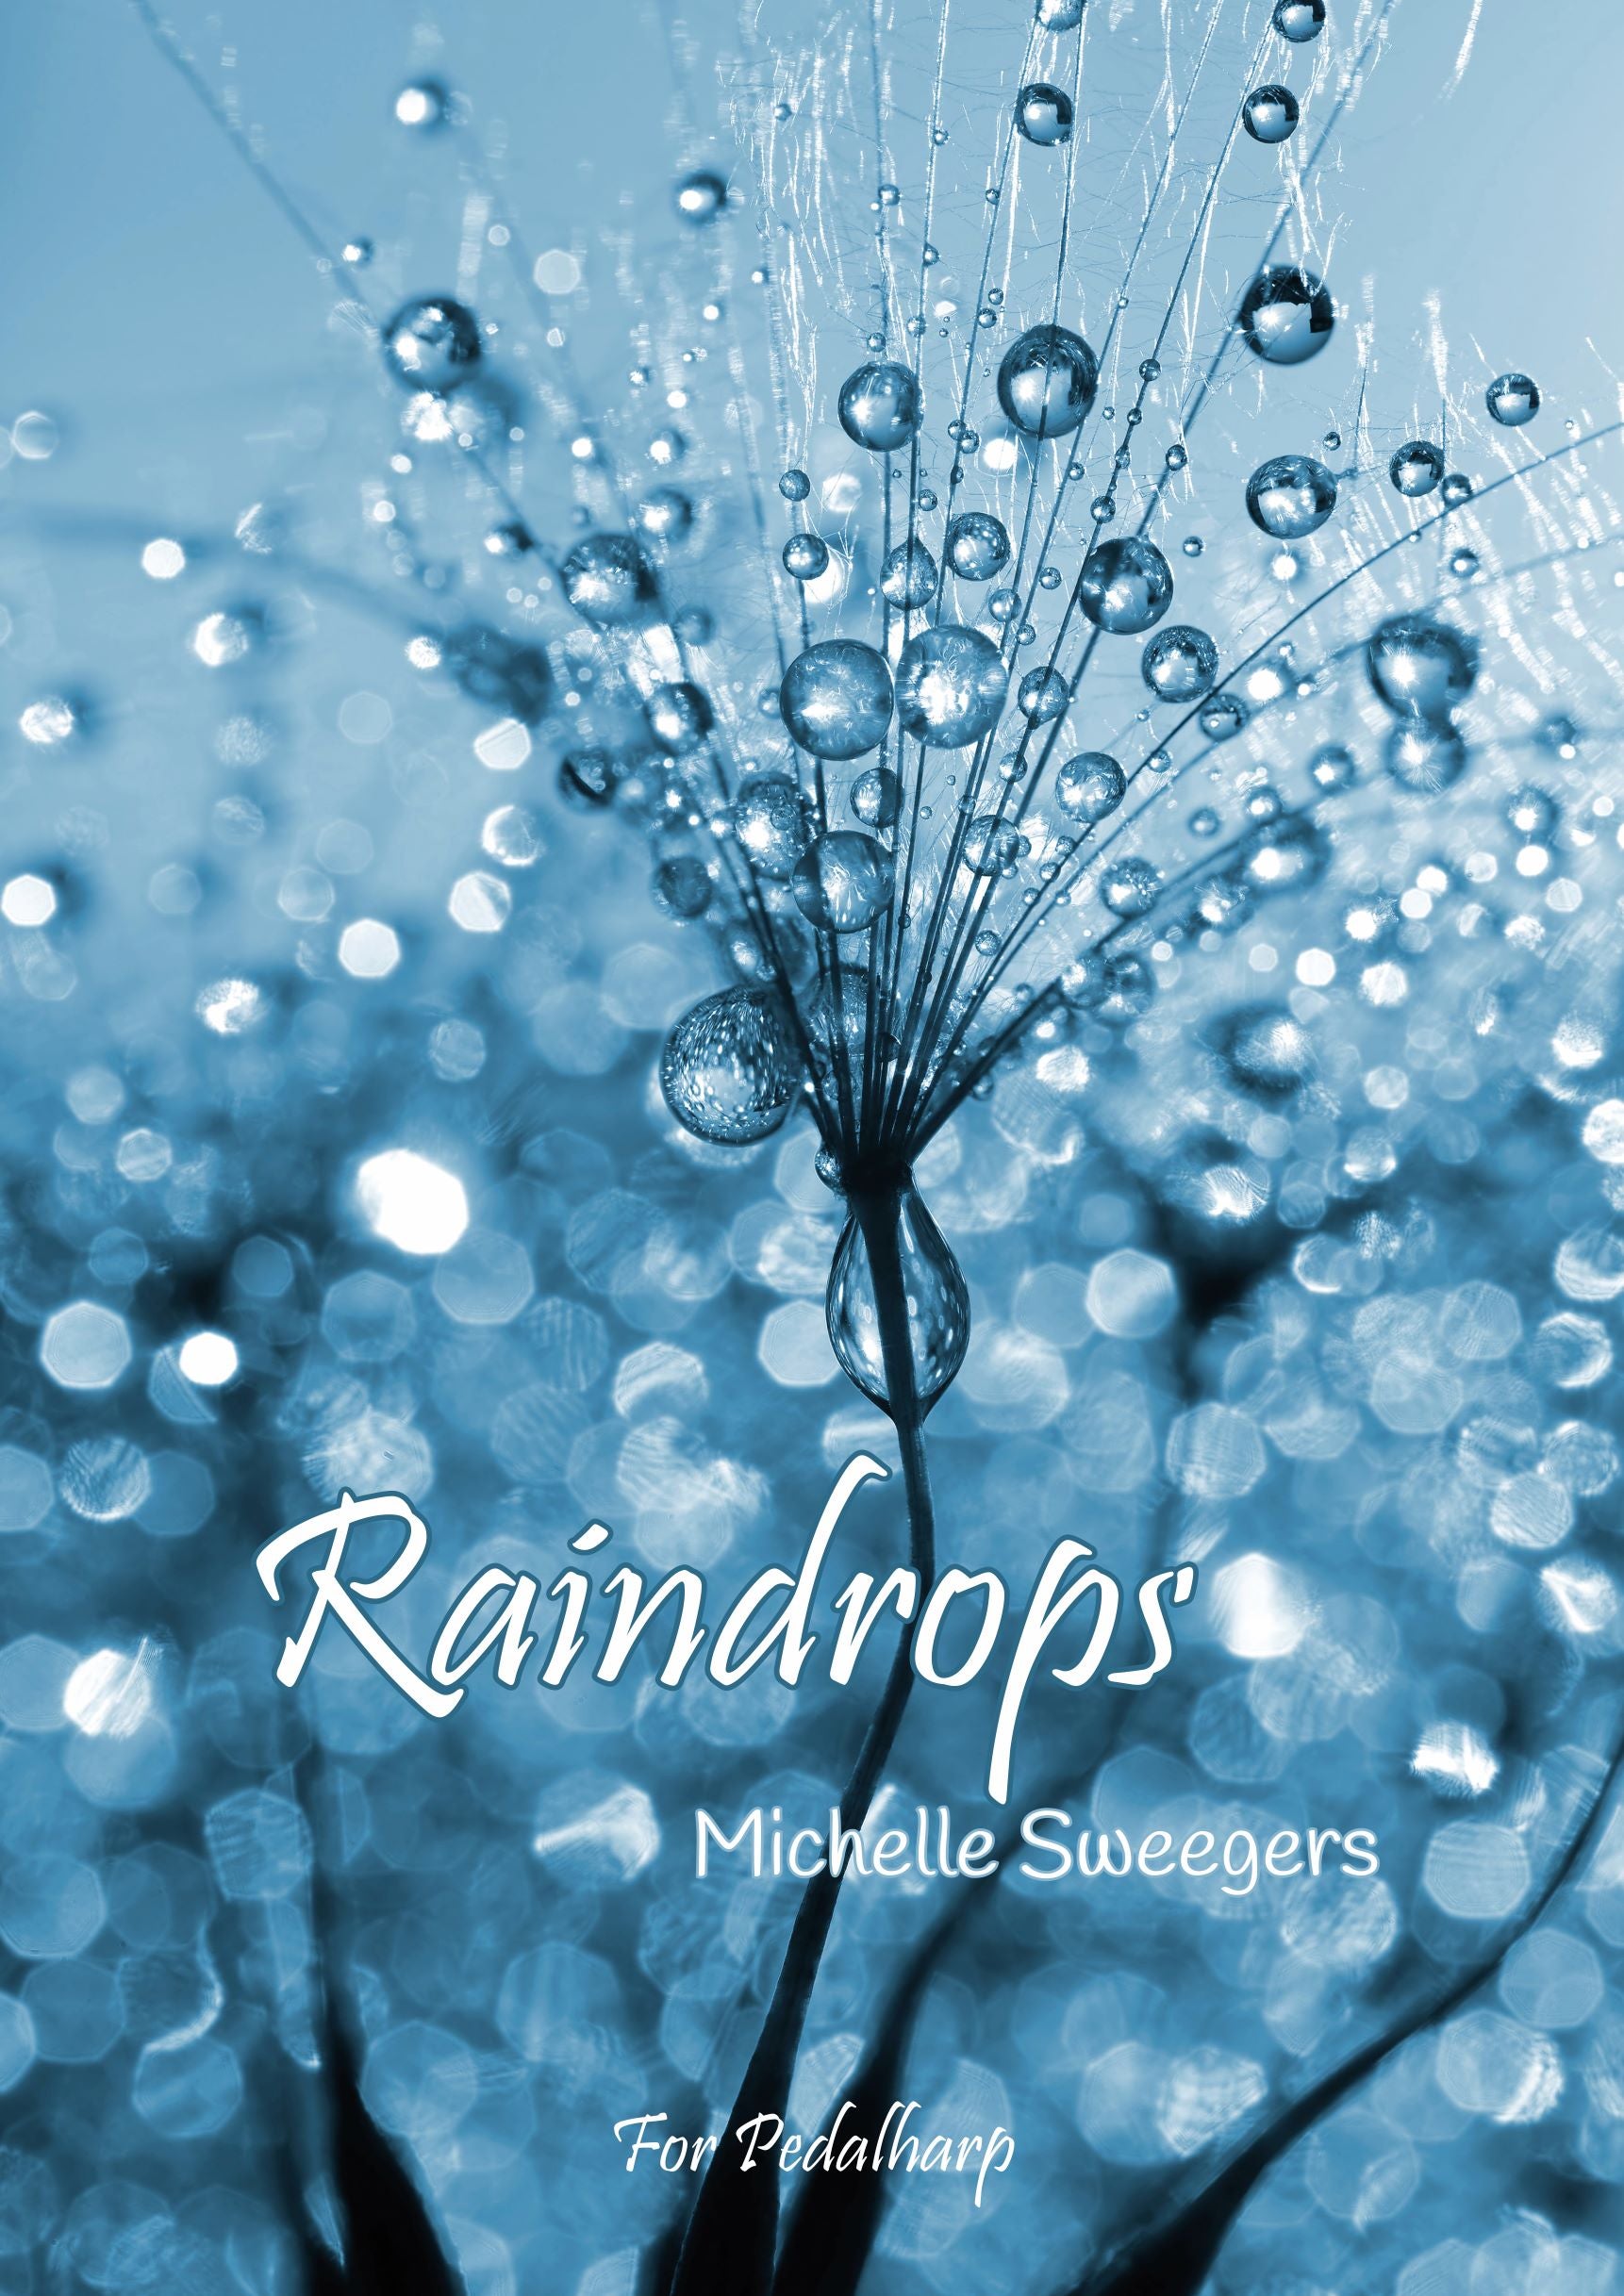 Raindrops - Bladmuziek